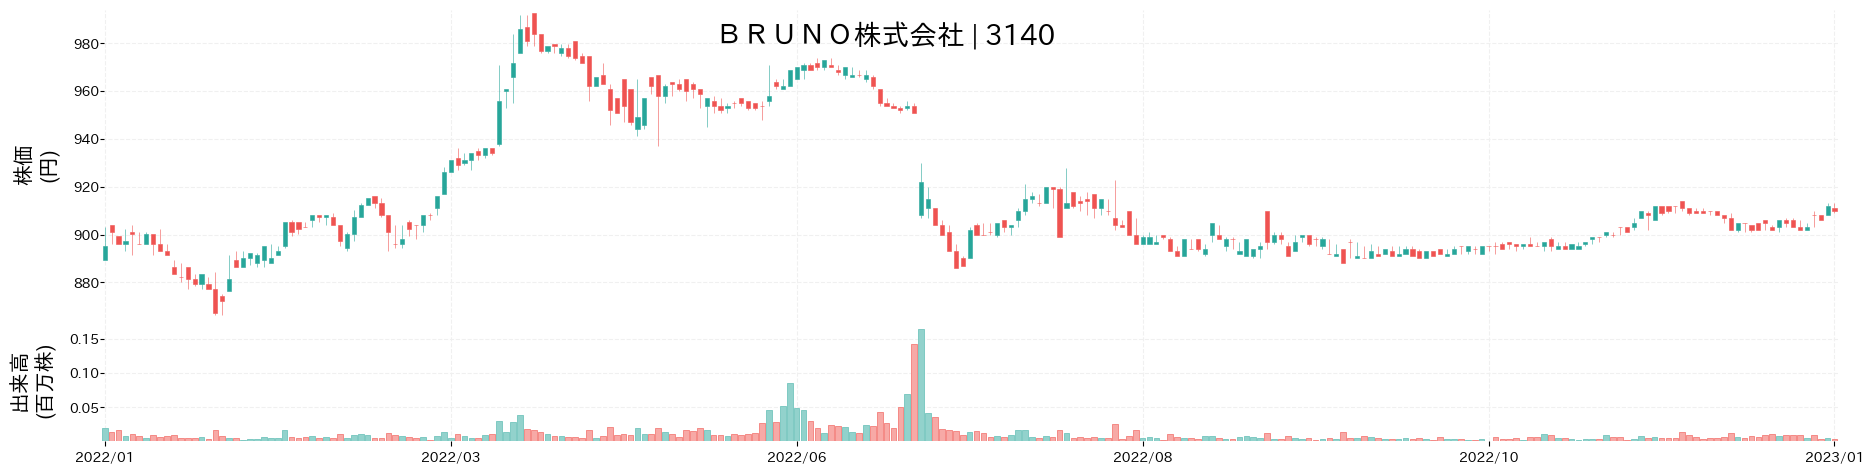 BRUNOの株価推移(2022)